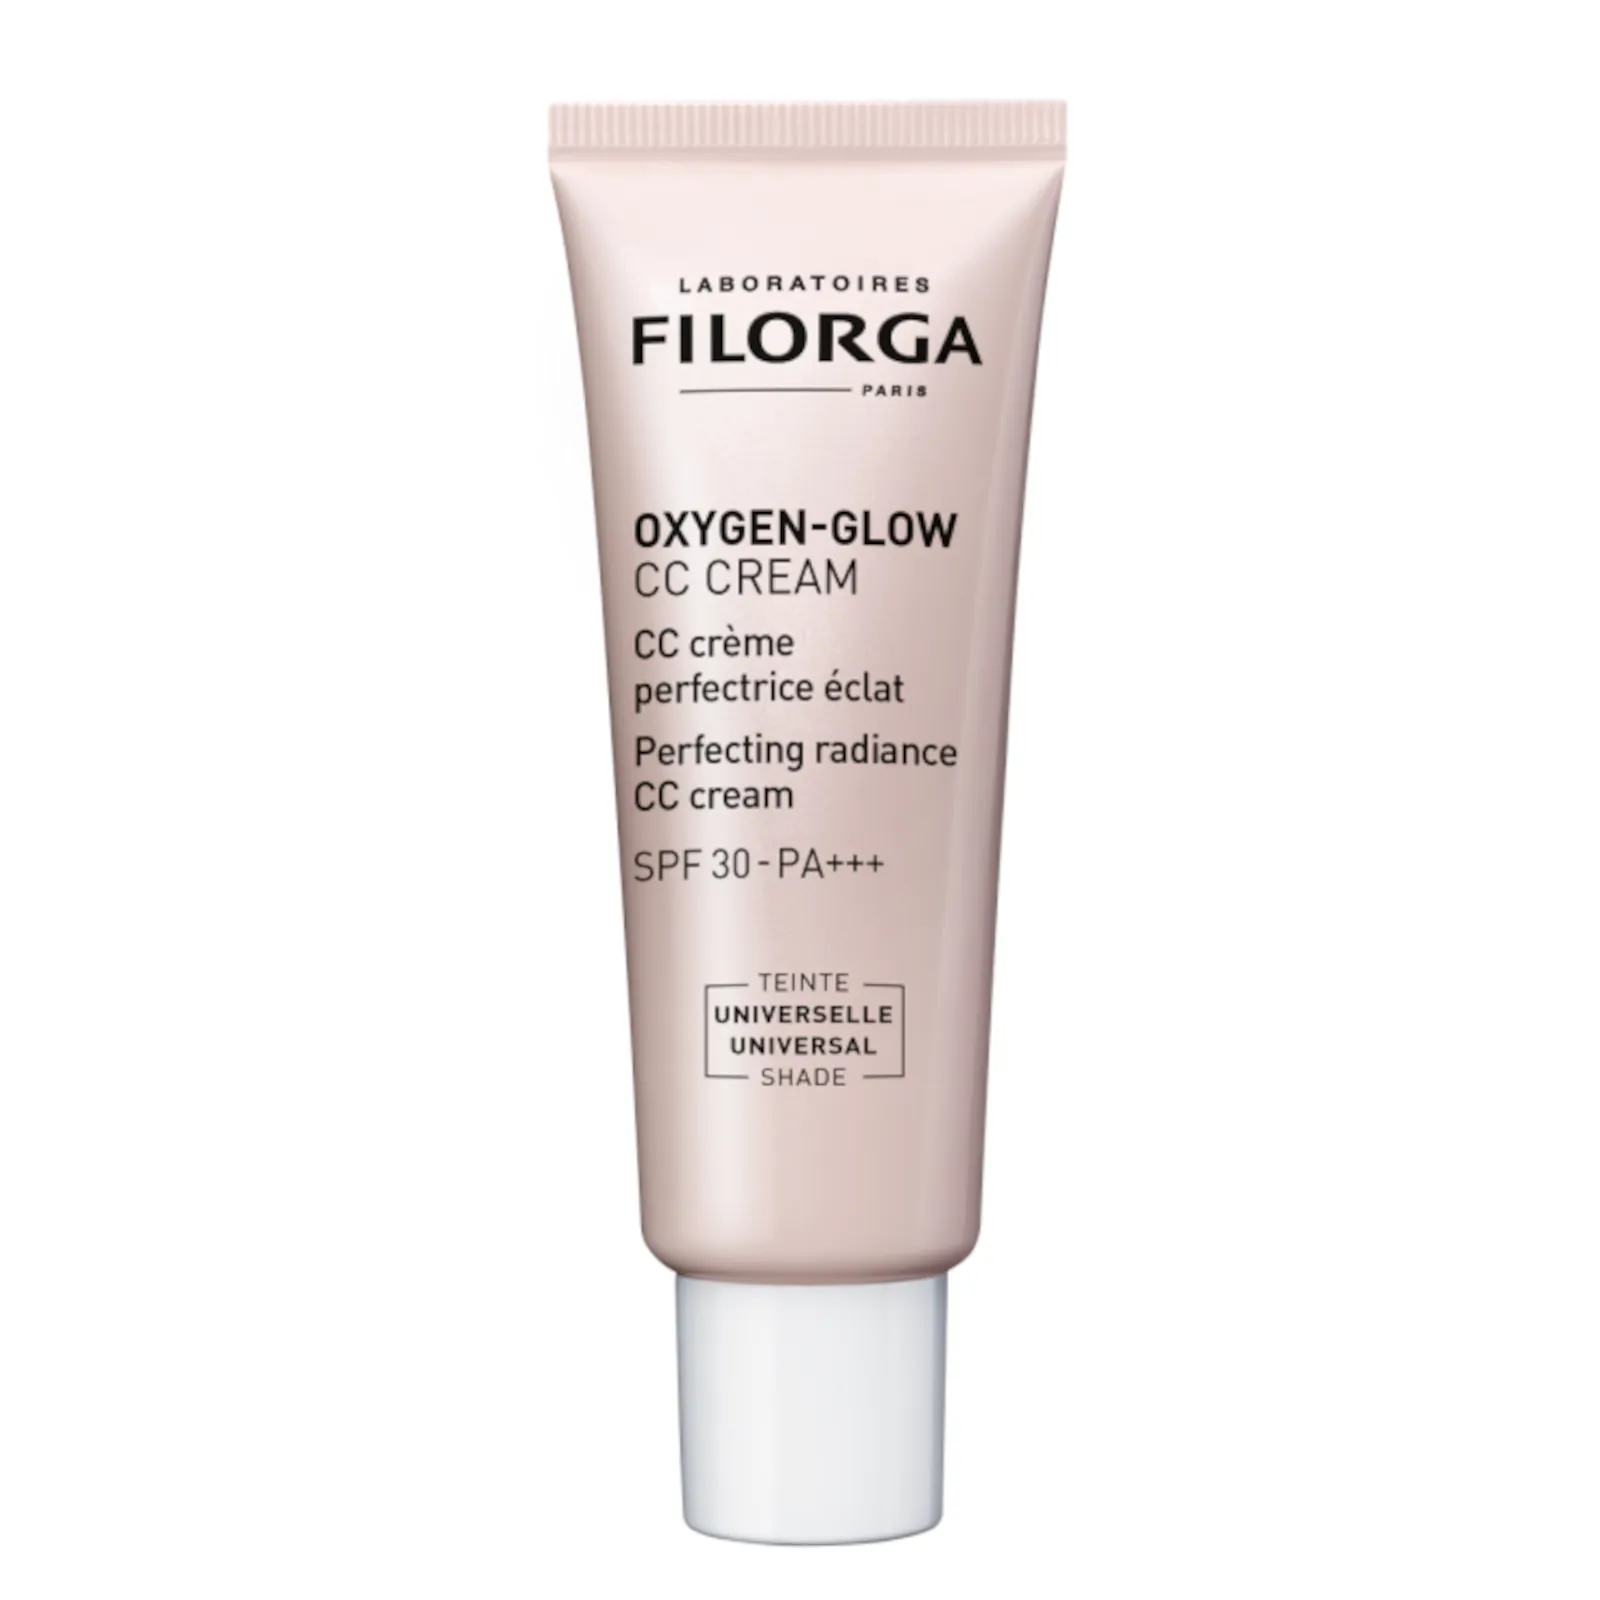 Filorga Oxygen Glow CC Cream SPF30 40ml